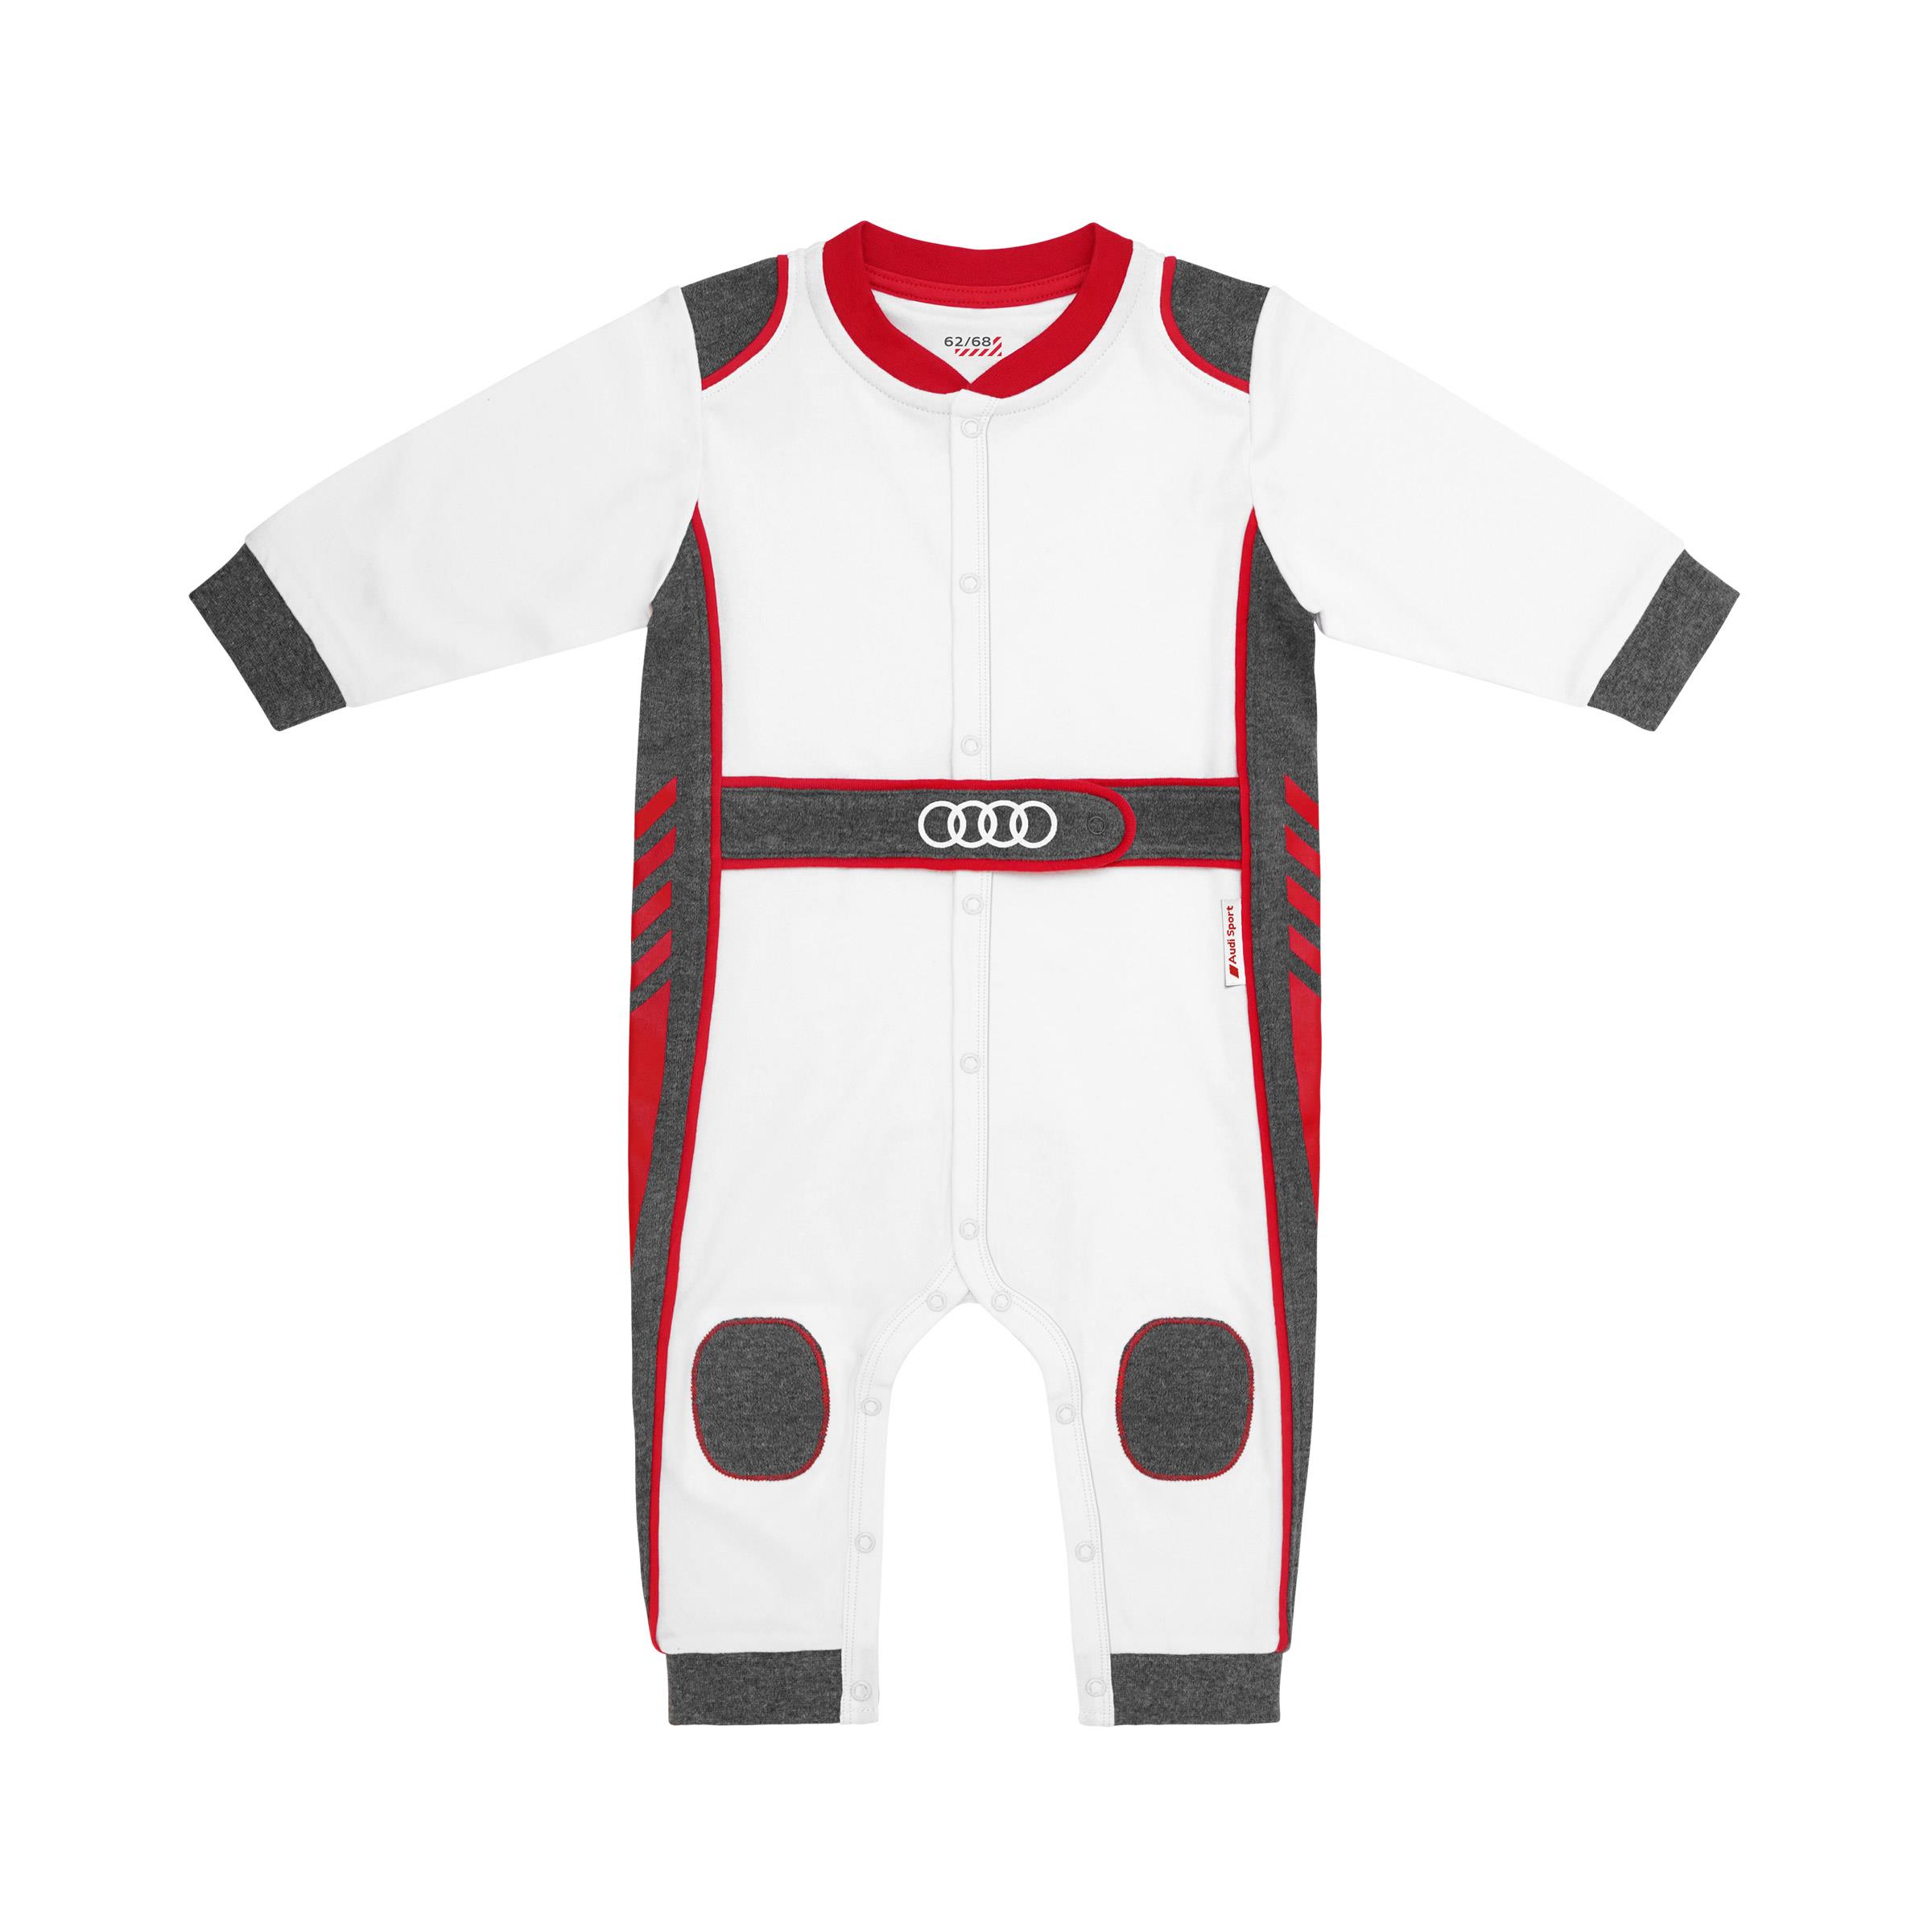 Audi Sport Baby Body Racing weiß/rot/grau Baumwolle Größe 62/68 3202200301